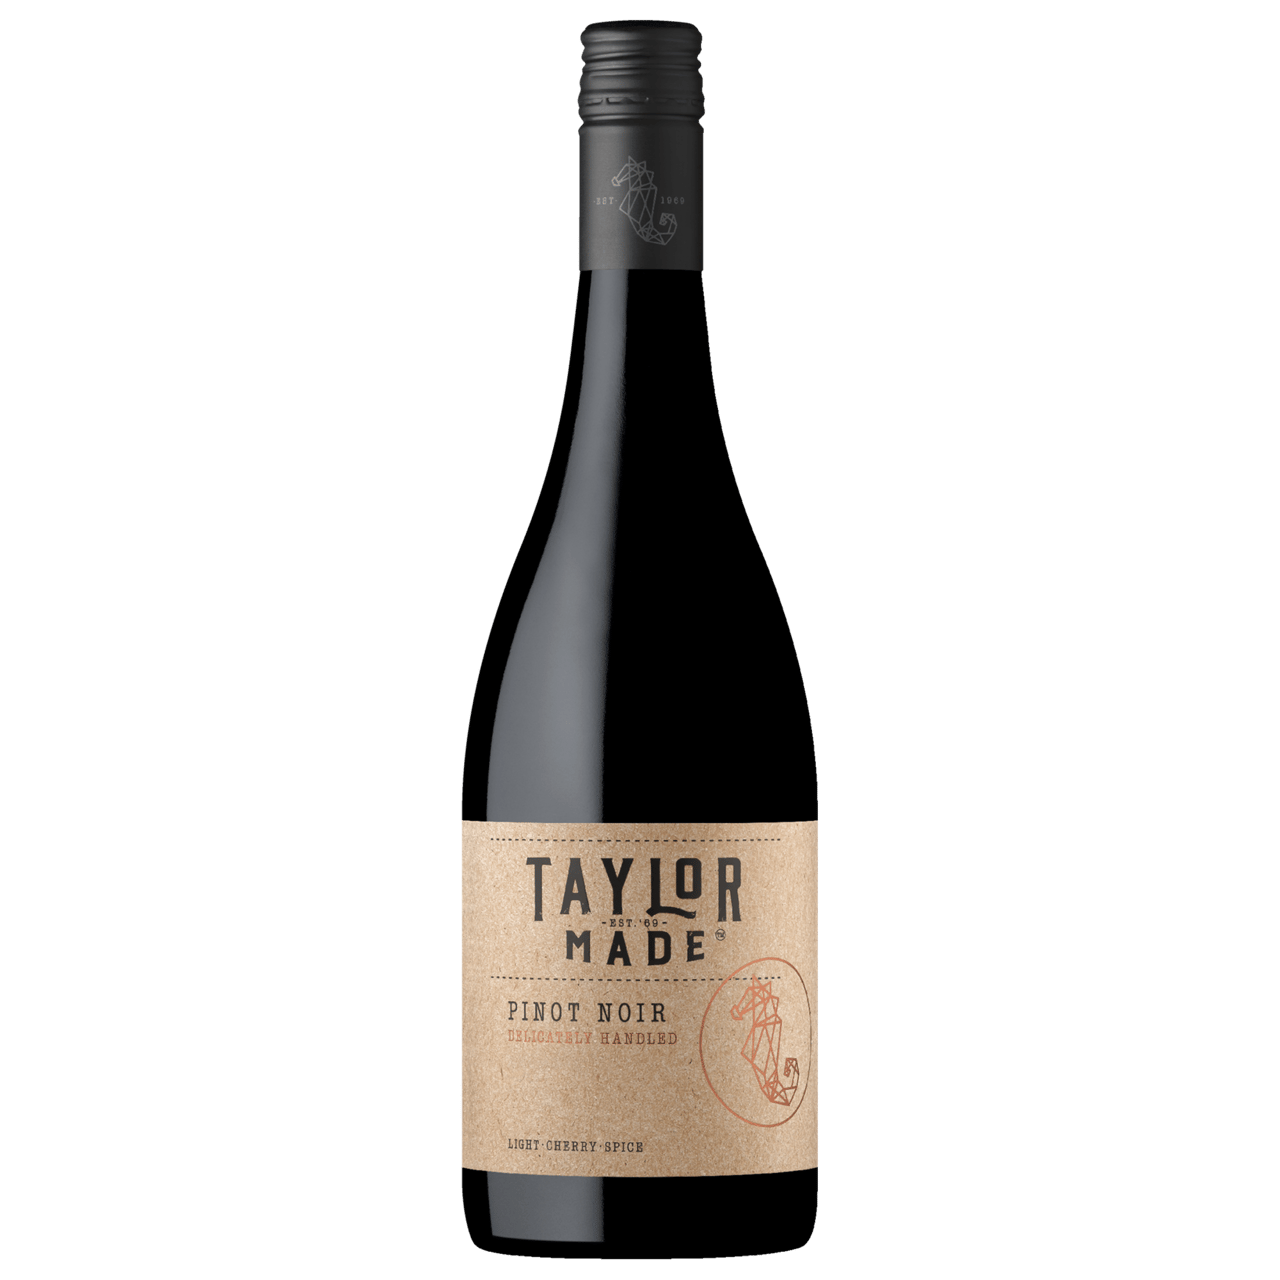 Taylors Taylor Made Pinot Noir